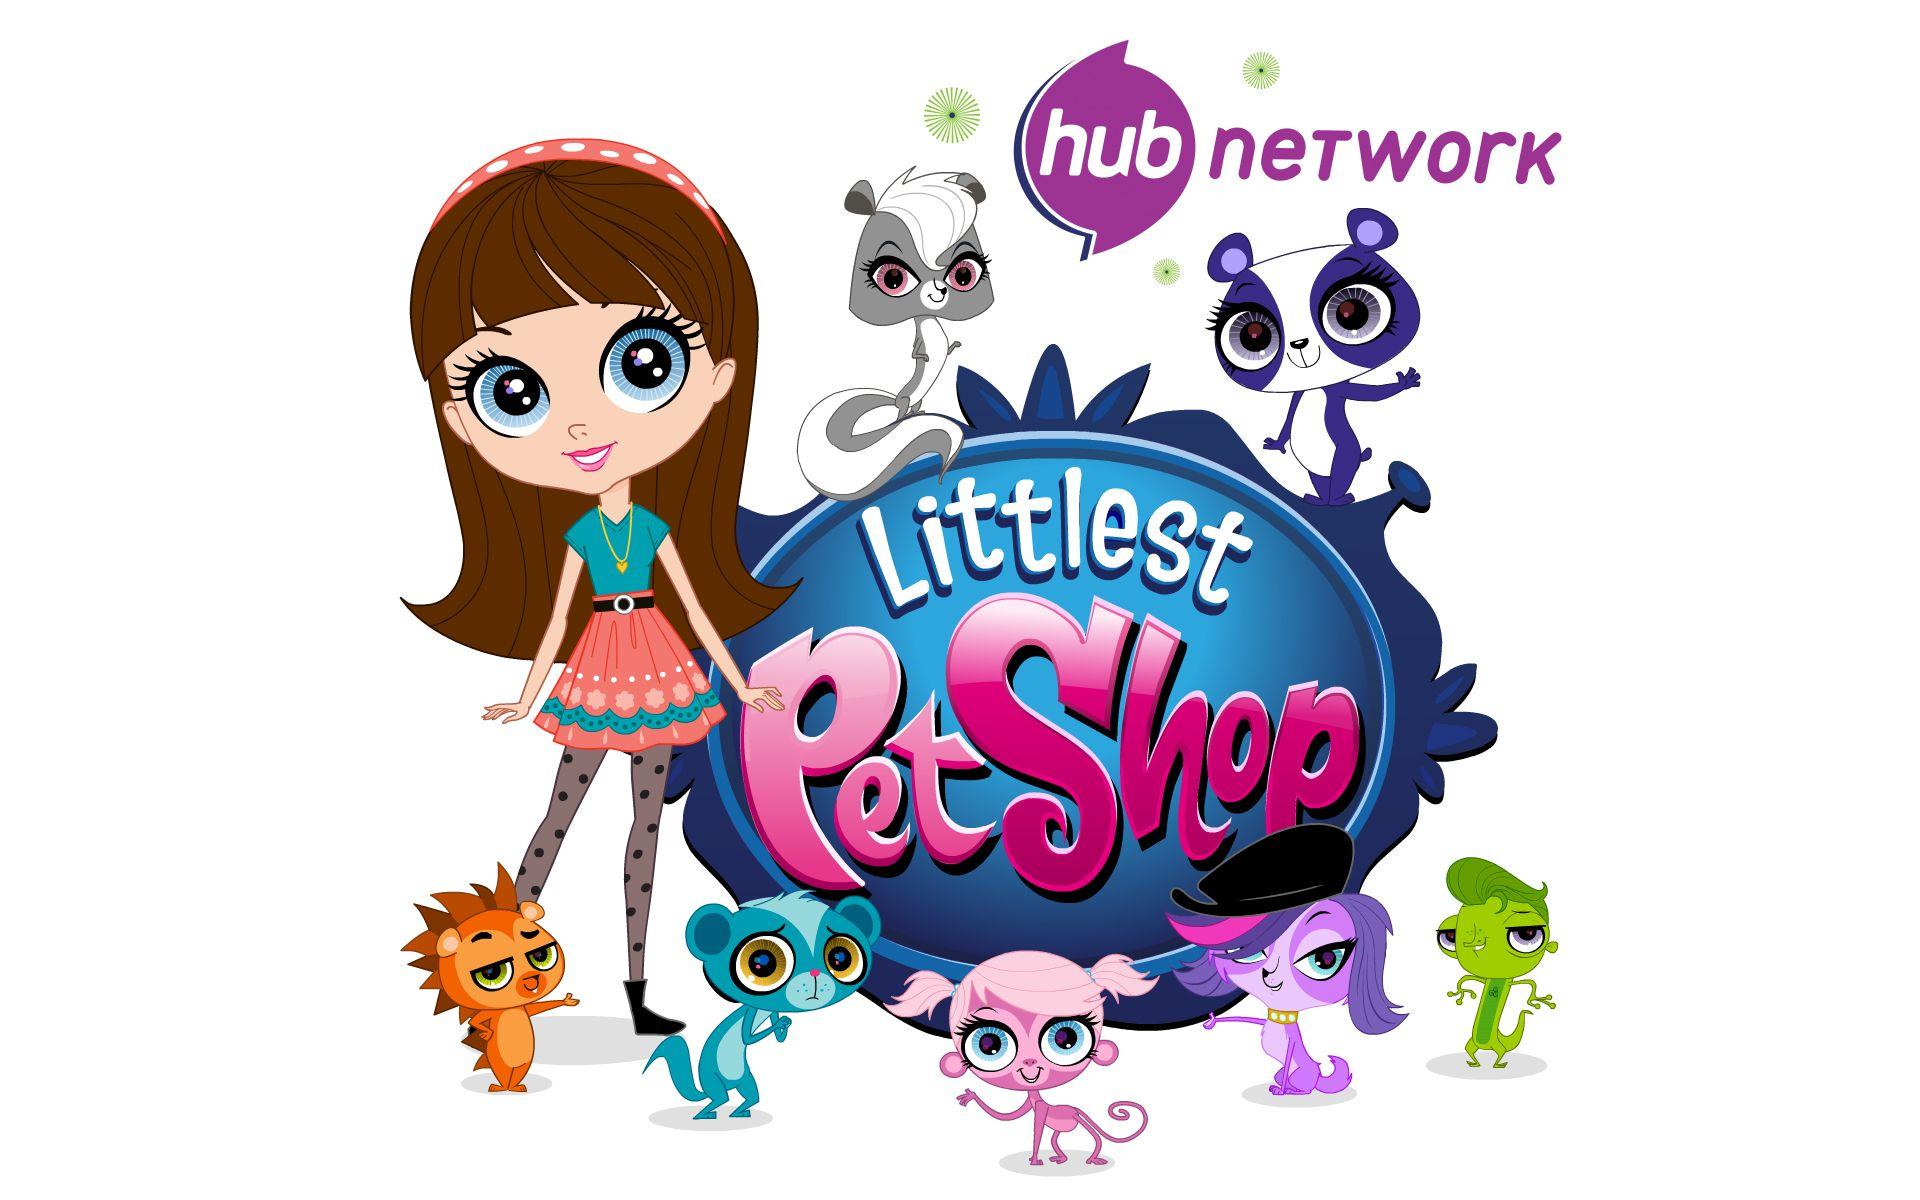 Littlest Pet Shop (TV Series 2012– )Pro